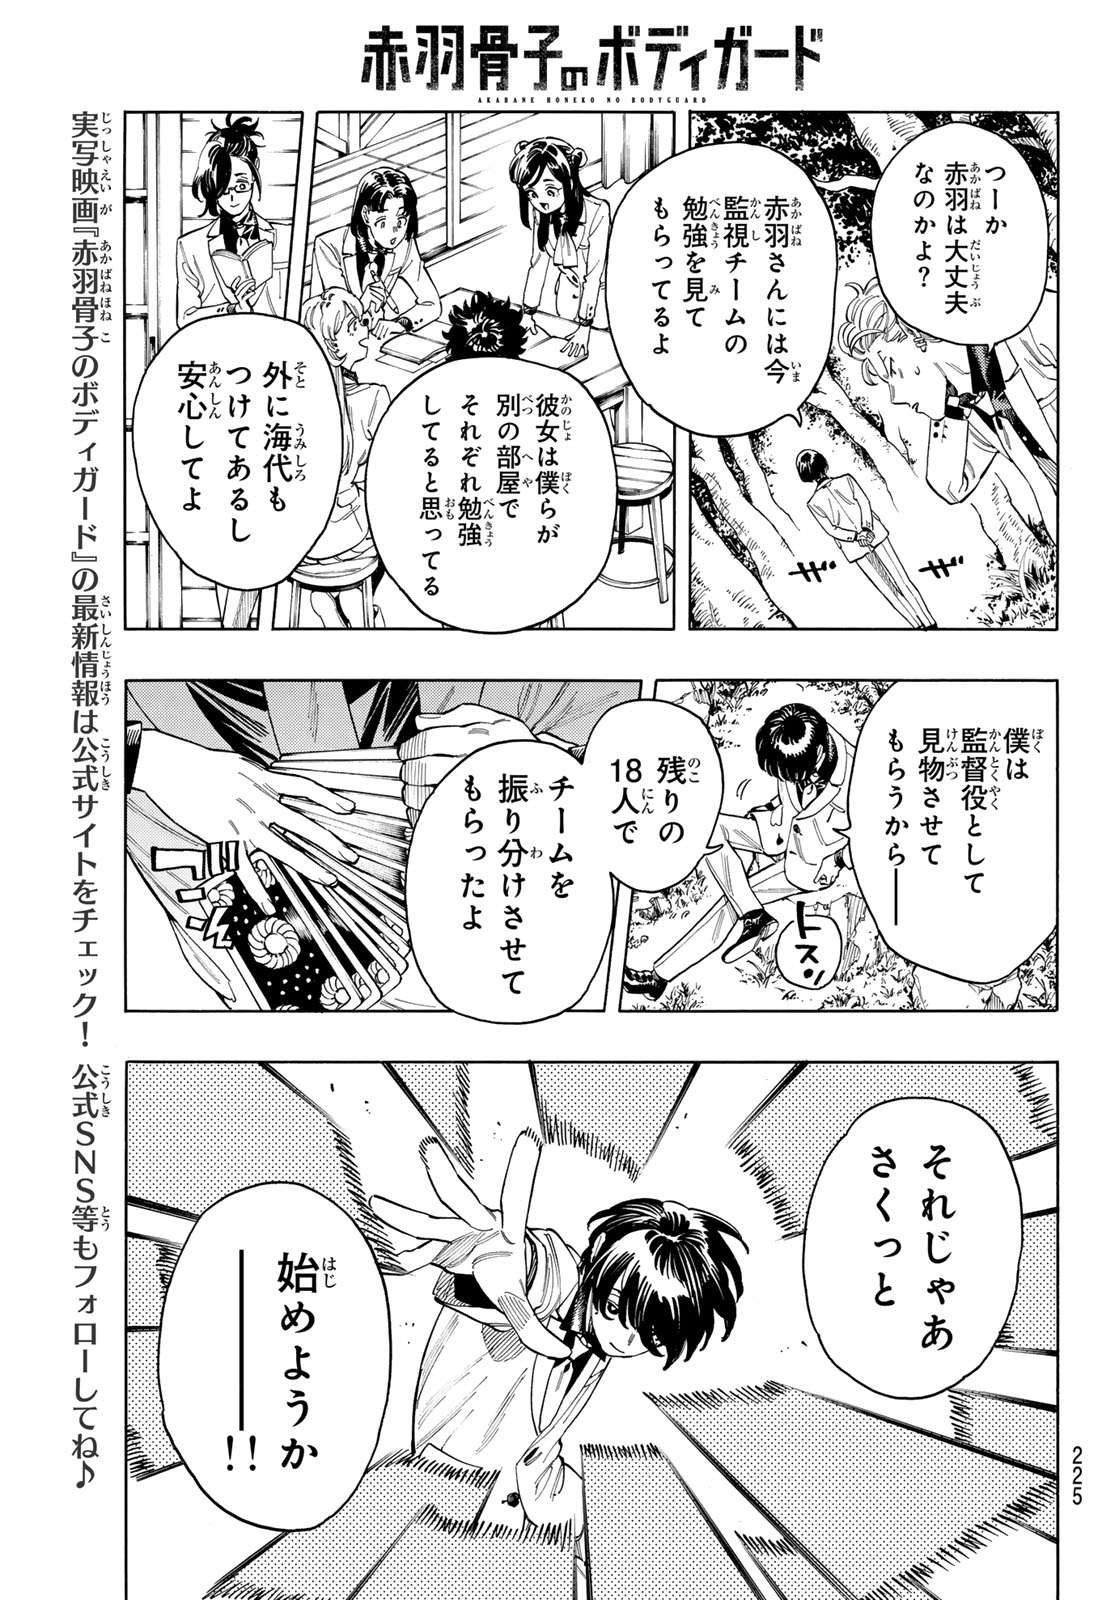 Akabane Honeko no Bodyguard - Chapter 86 - Page 5